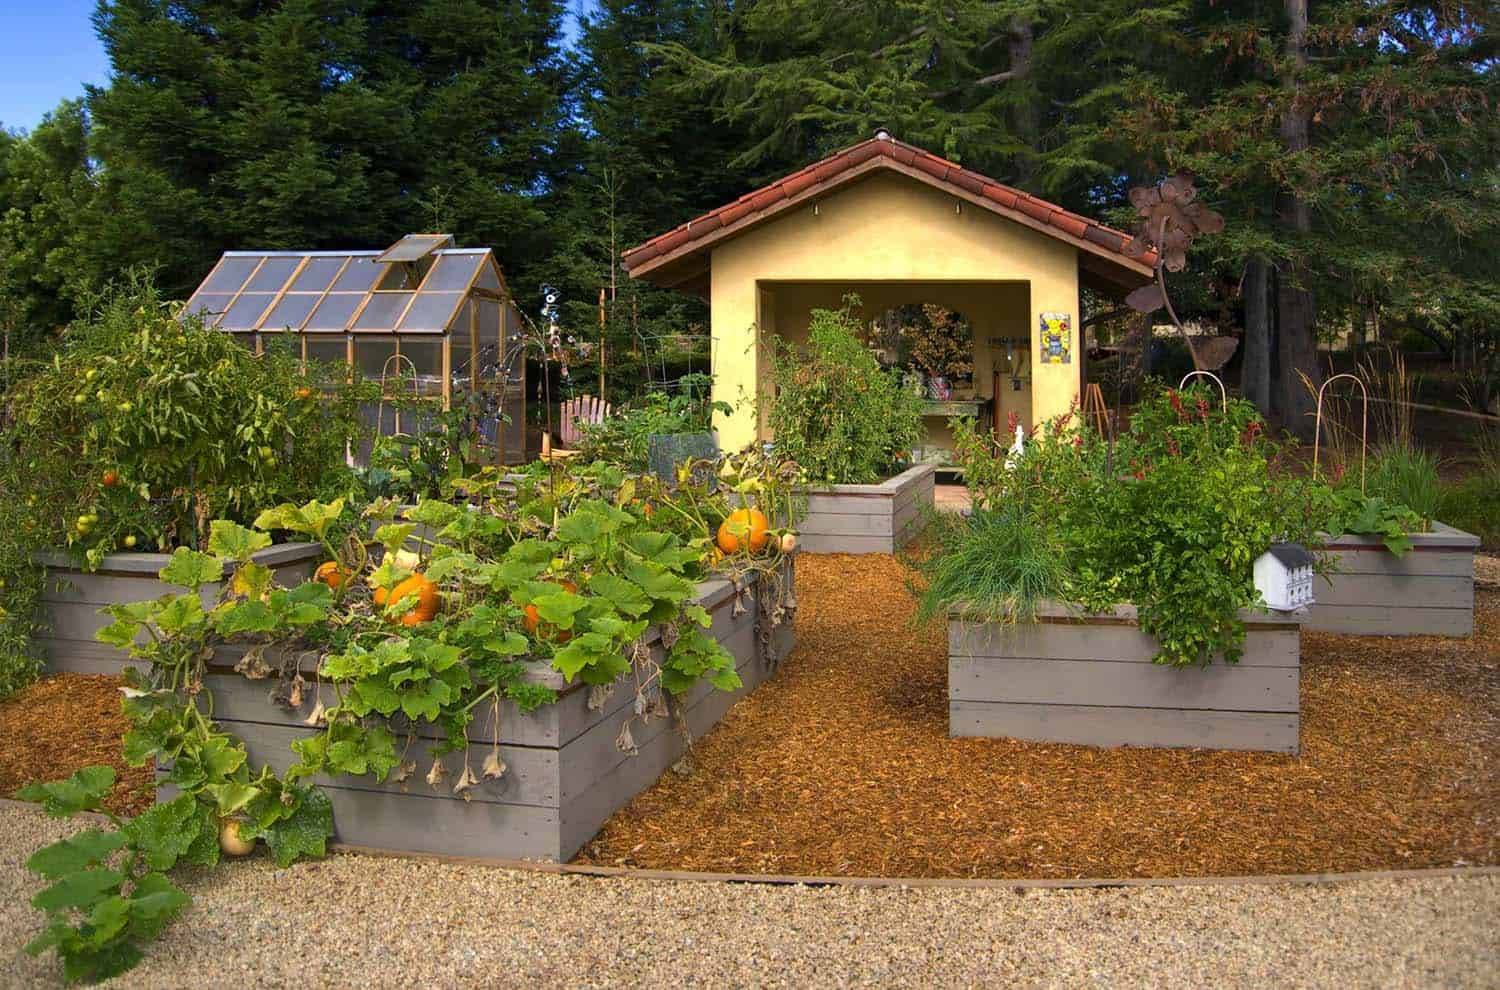 Simple Raised Vegetable Garden Bed Ideas